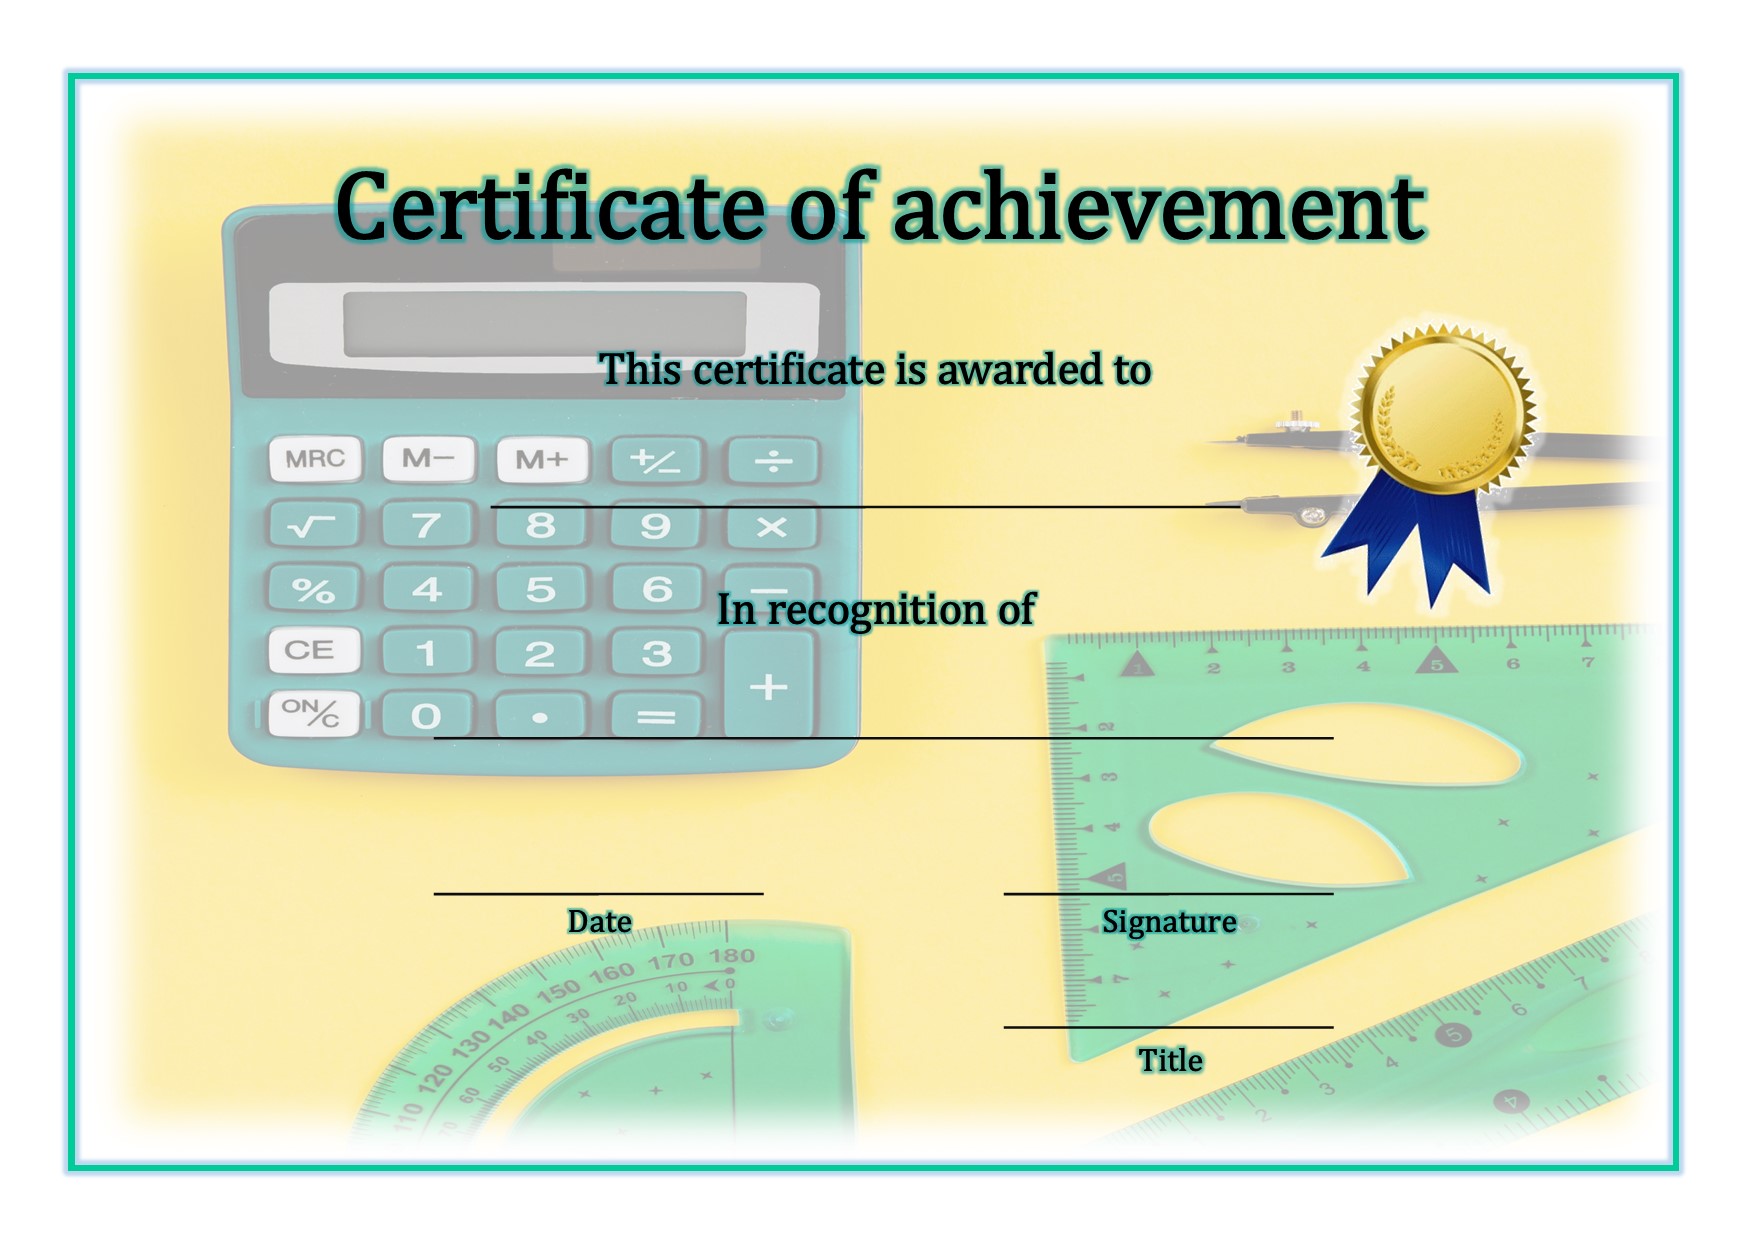 Personal certificate